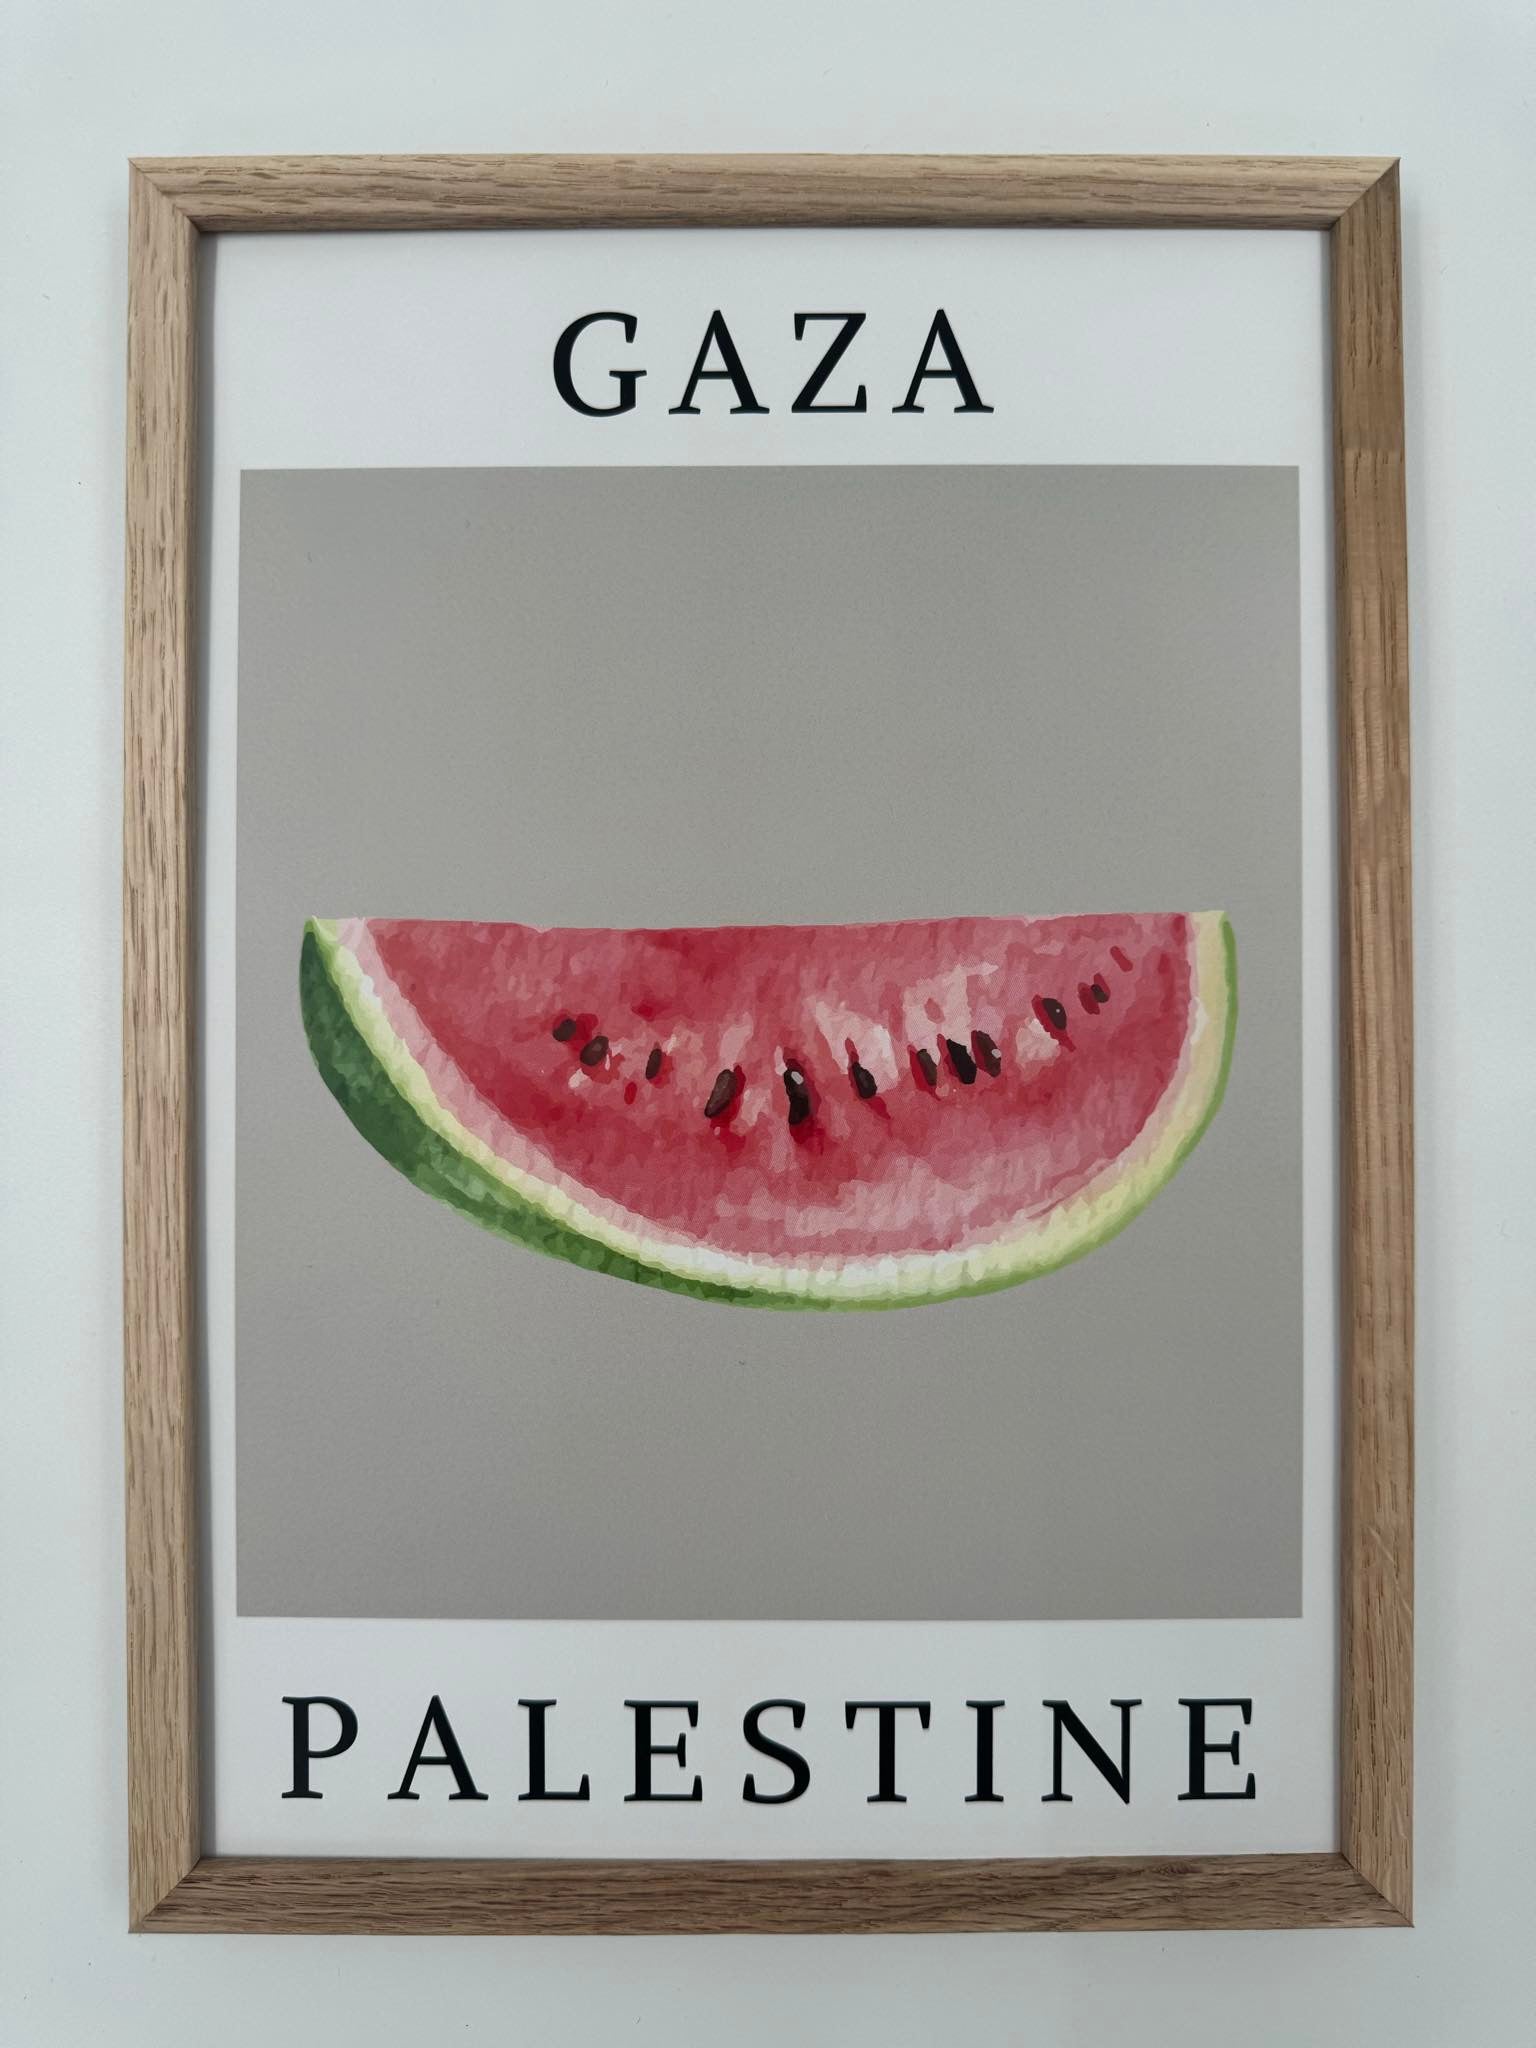 Gaza Watermelon